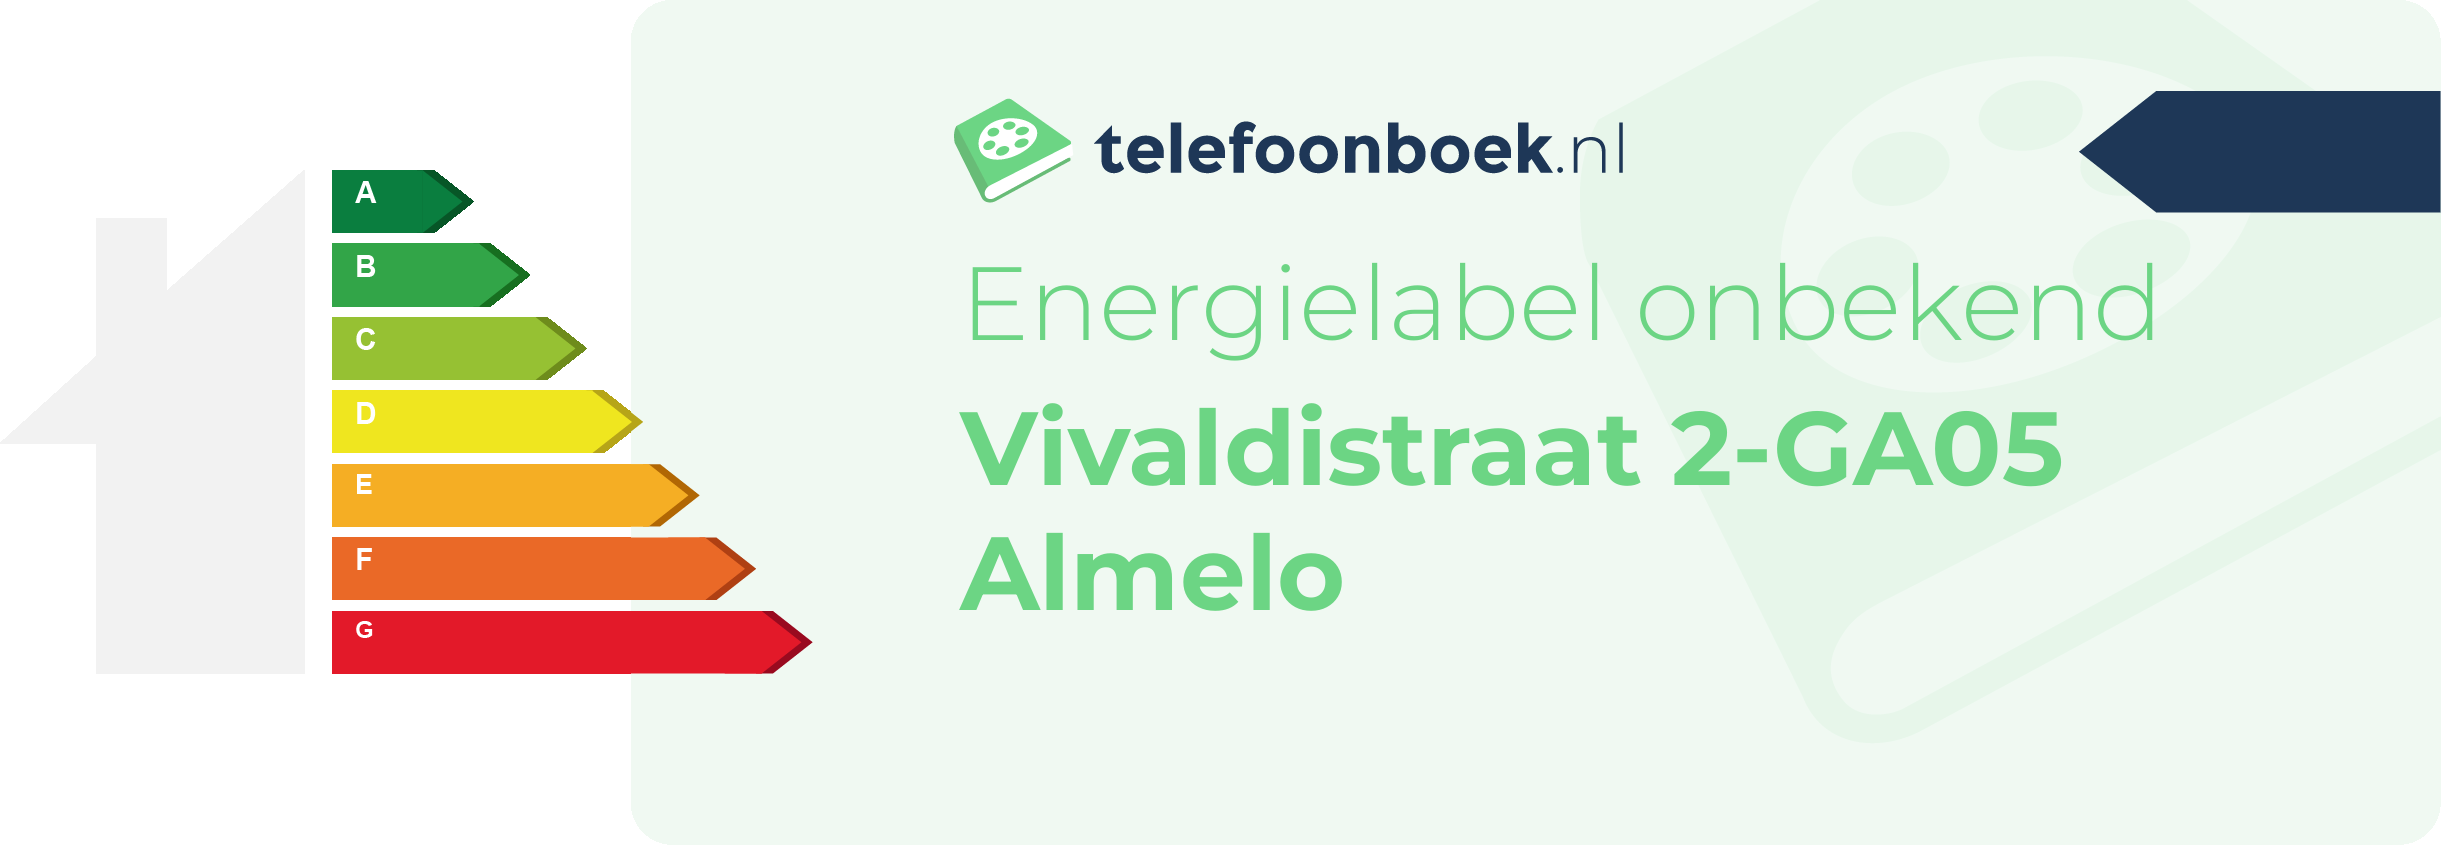 Energielabel Vivaldistraat 2-GA05 Almelo